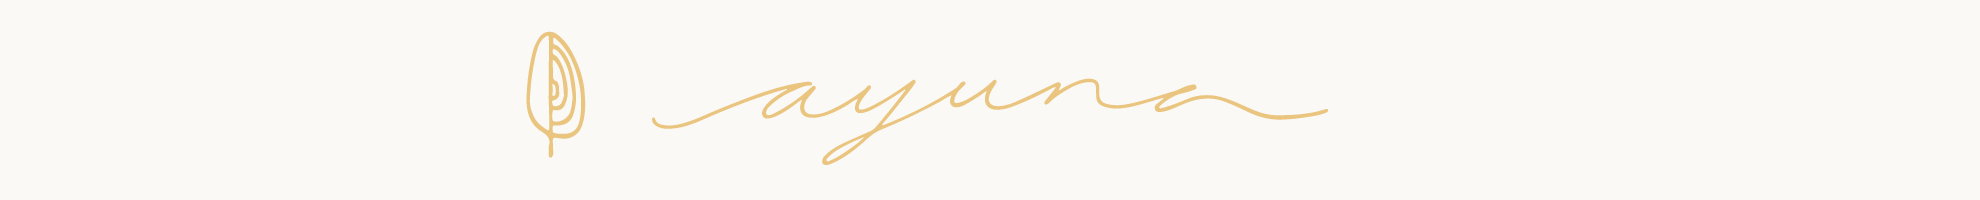 Auyna logo